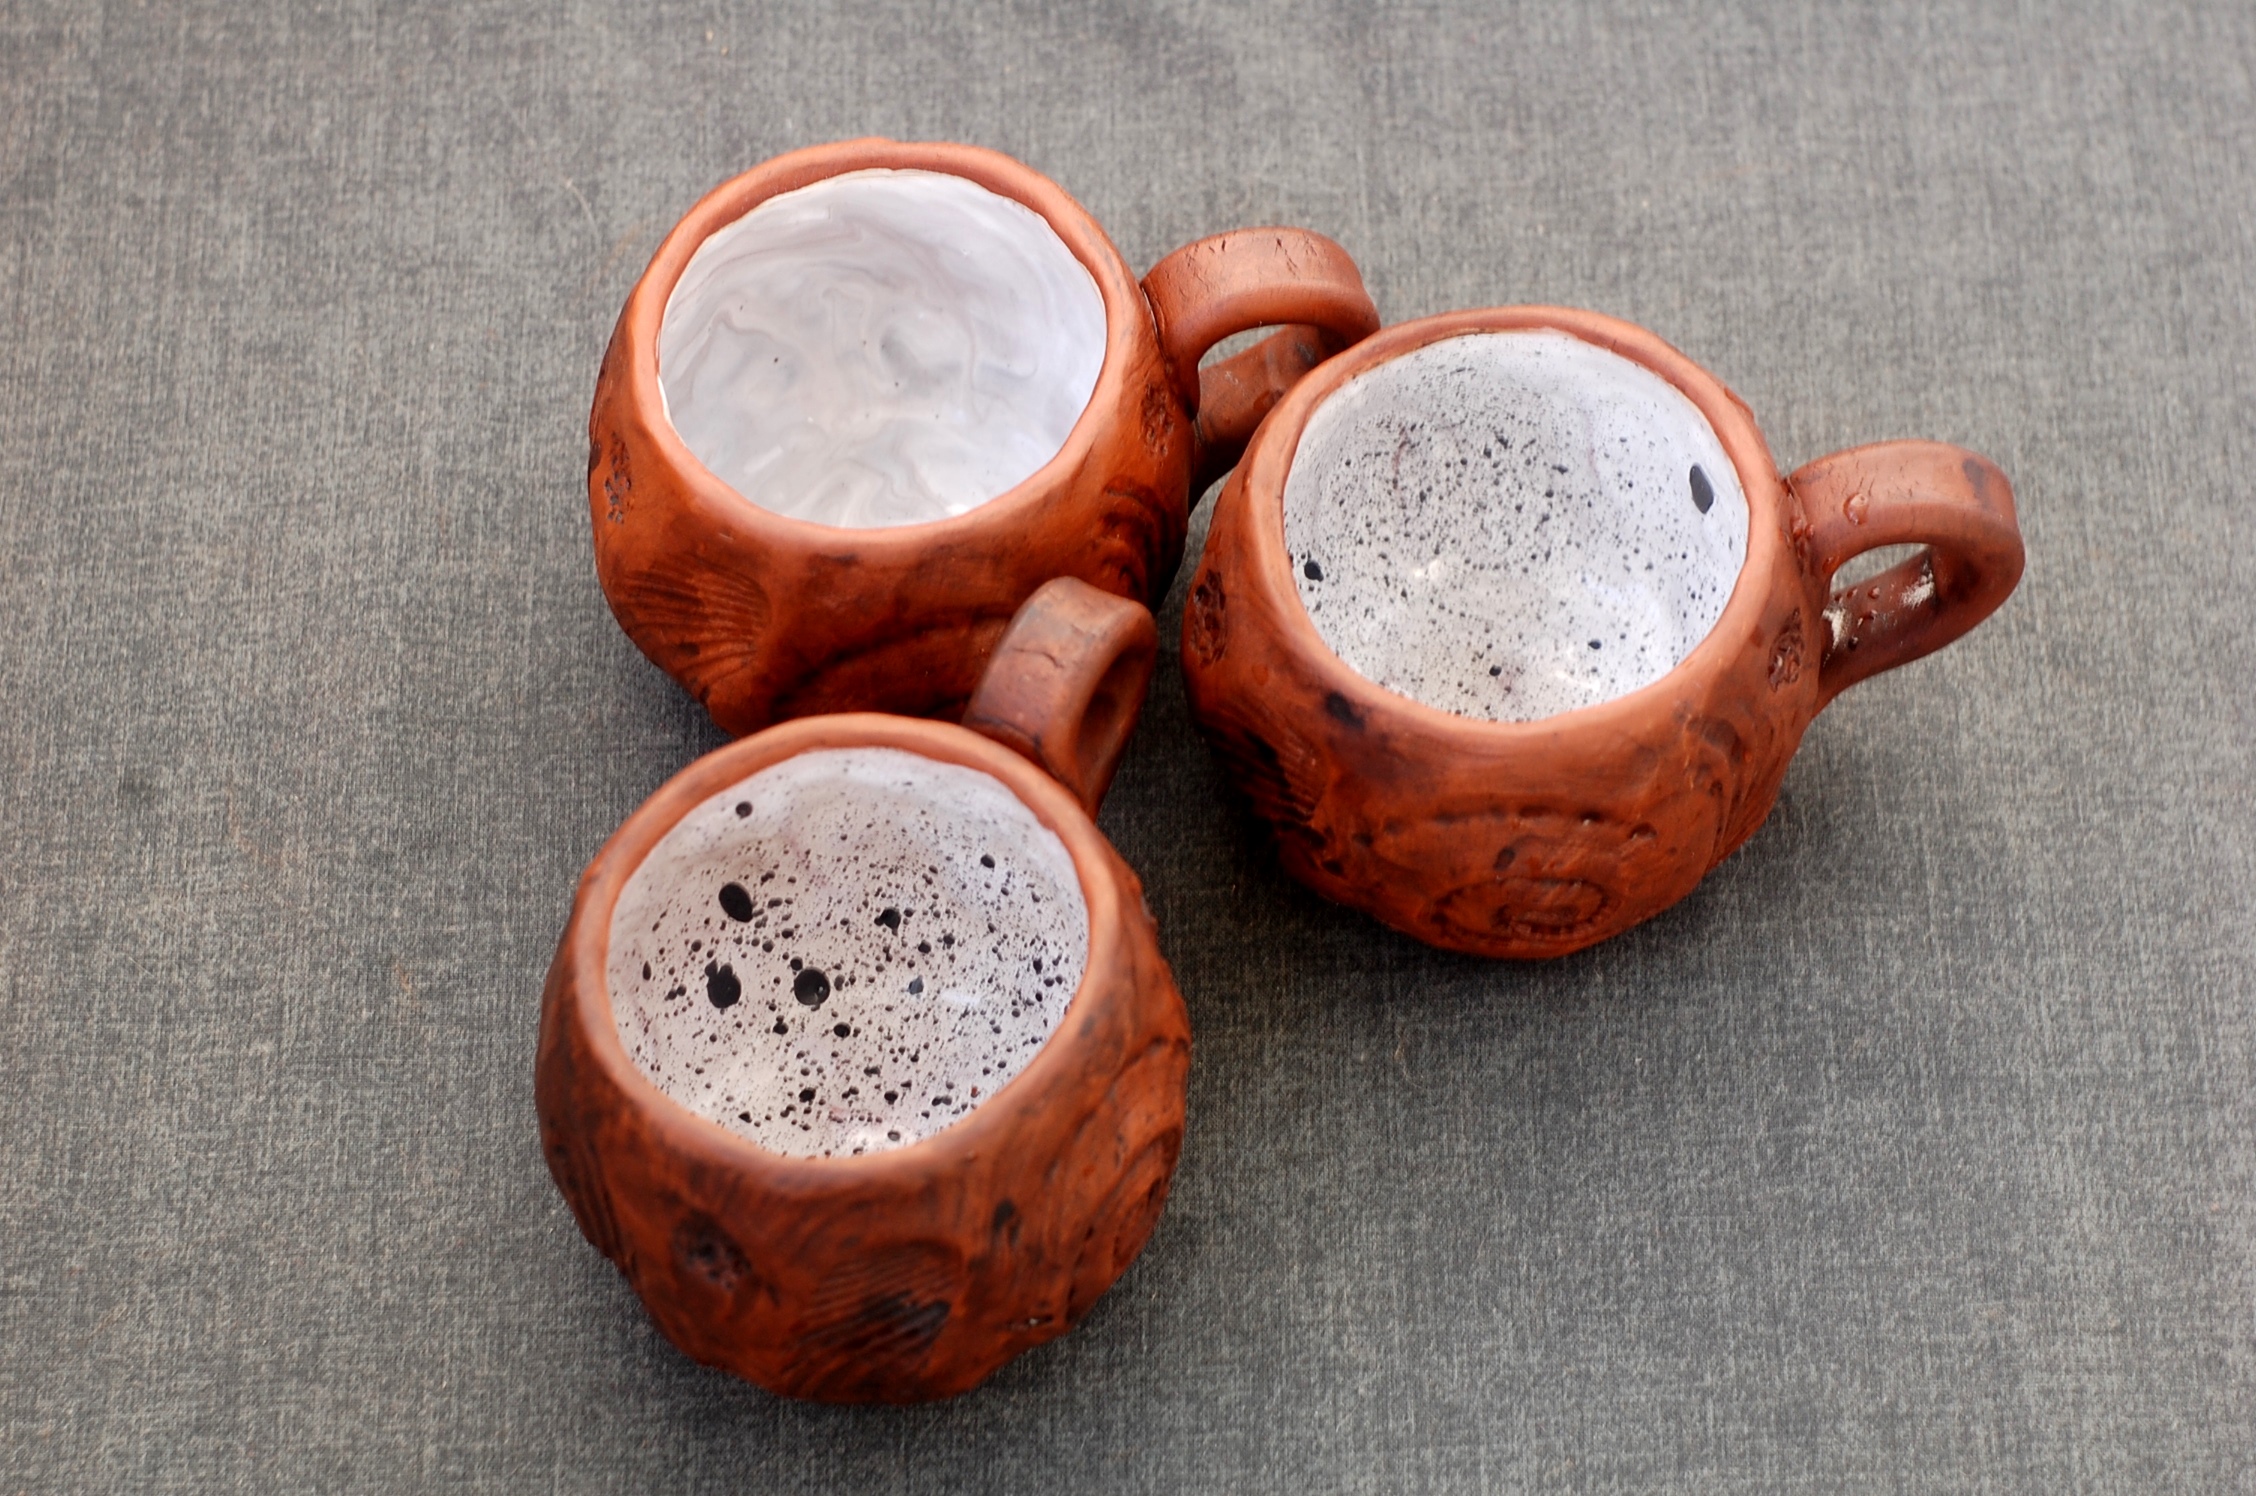 Pottery mug "Sea" w/ handle